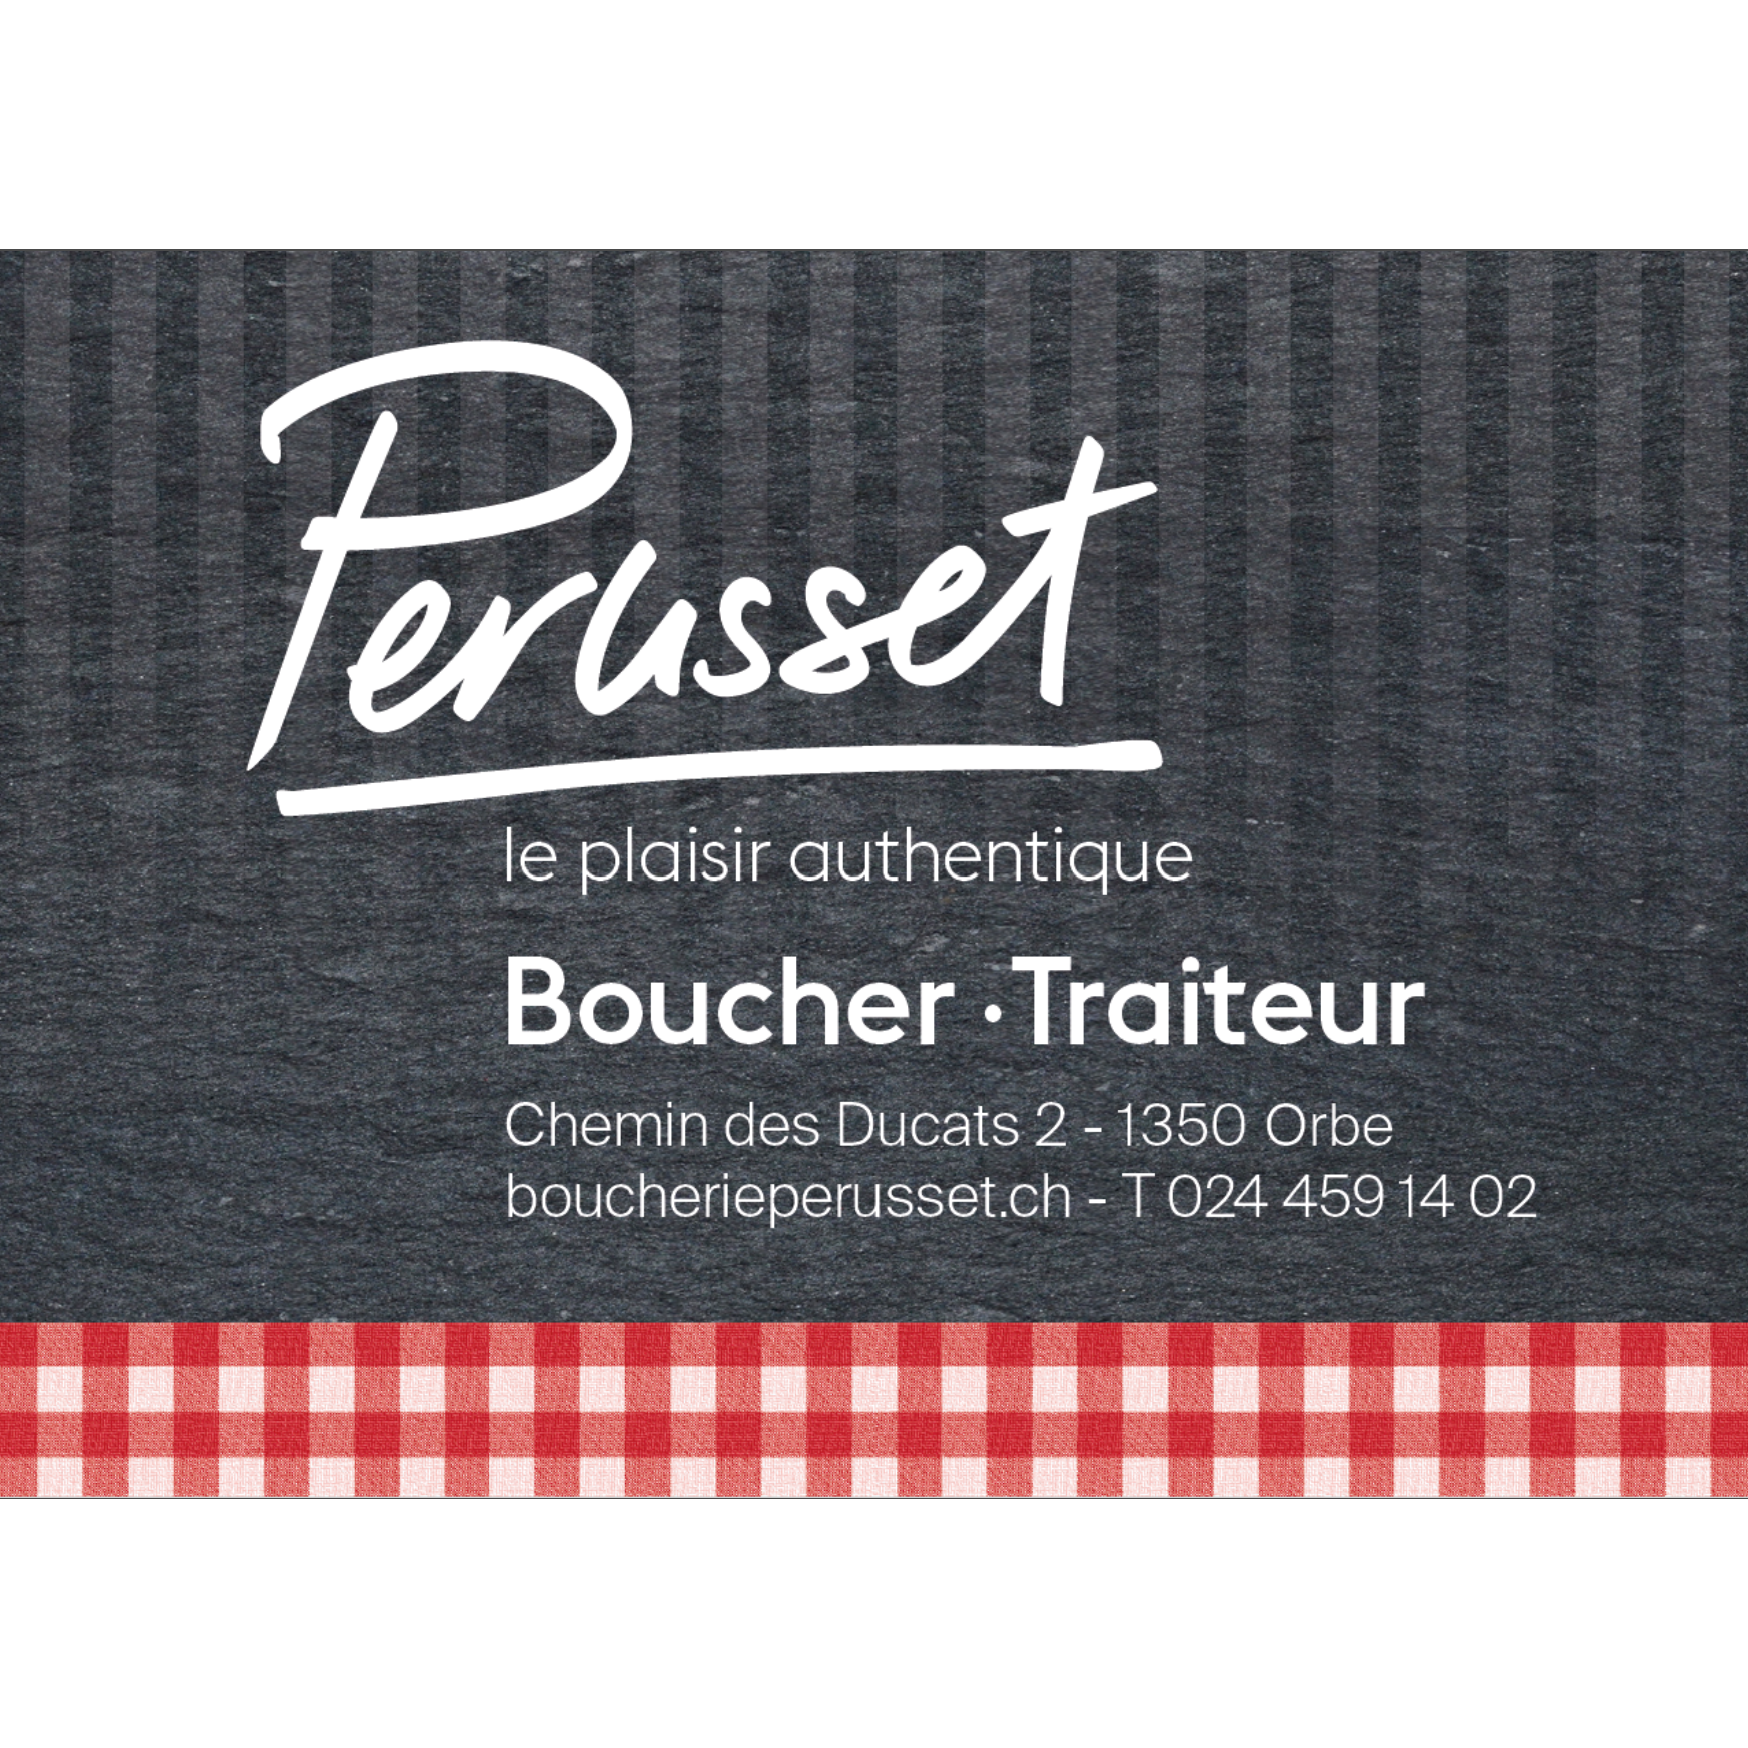 Boucherie Perusset SA Logo